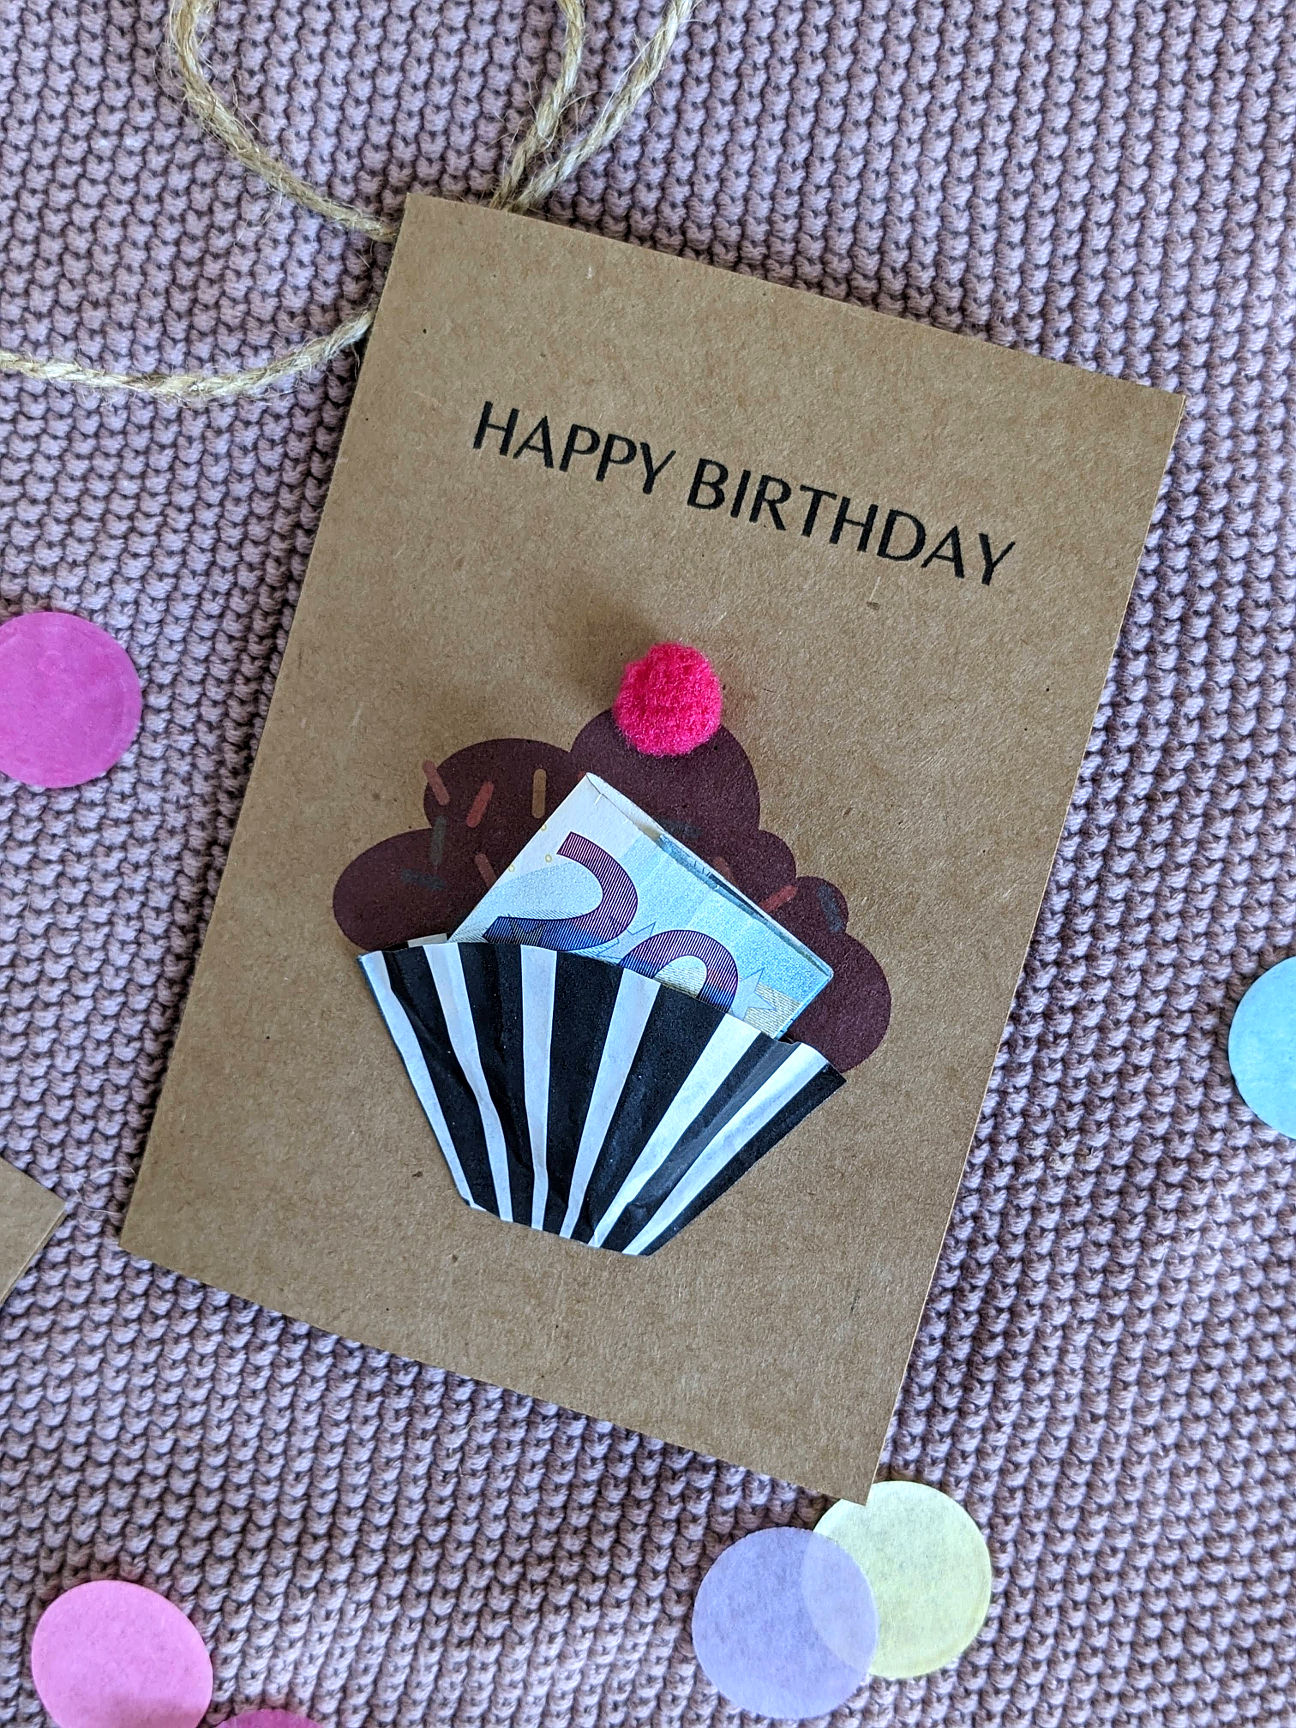 DIY Geburtstagskarte basteln Ideen